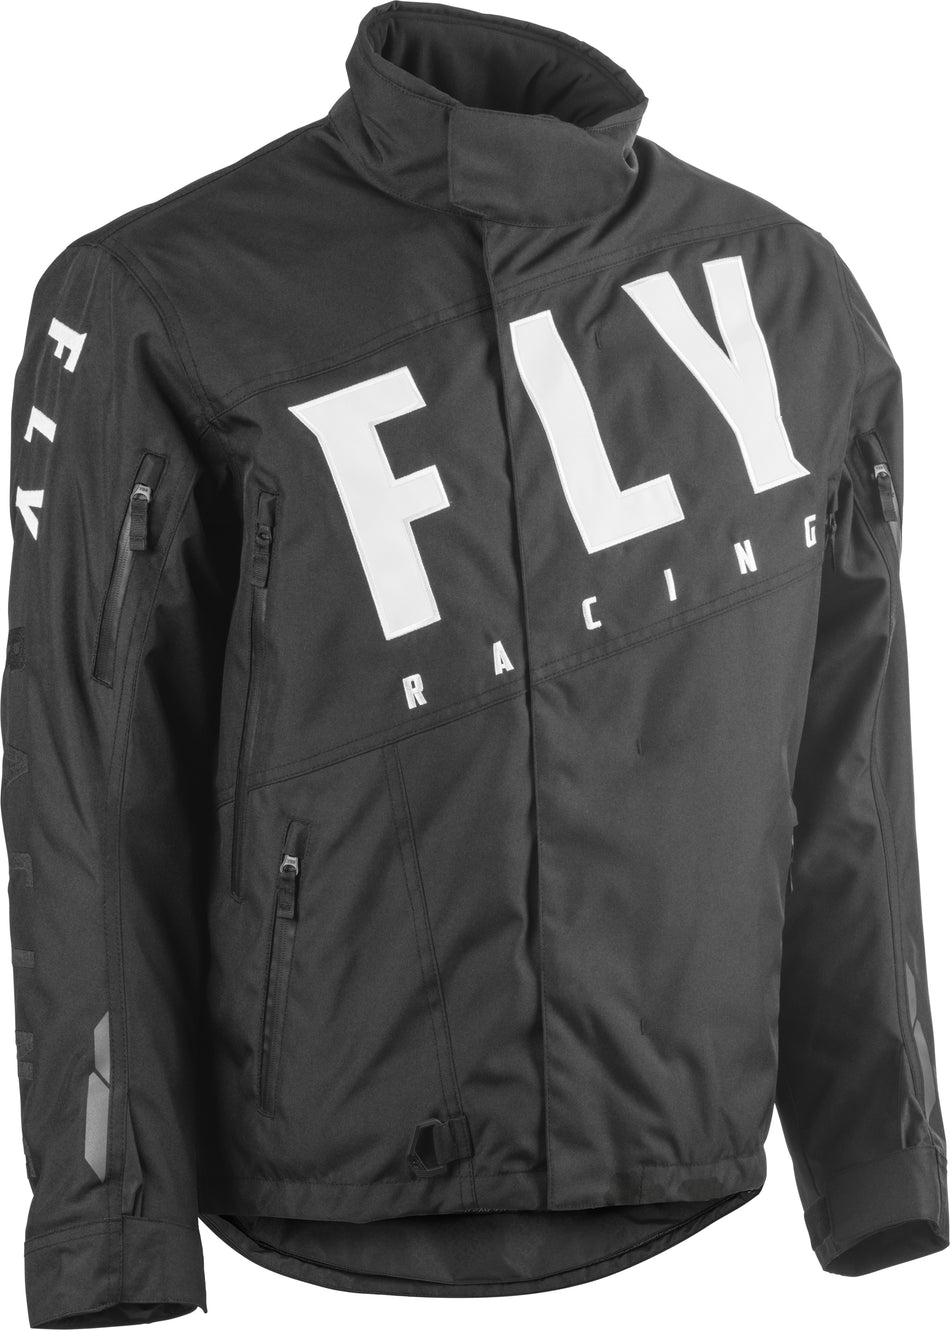 FLY RACING Fly Snx Pro Jacket Black 4x 470-41104X